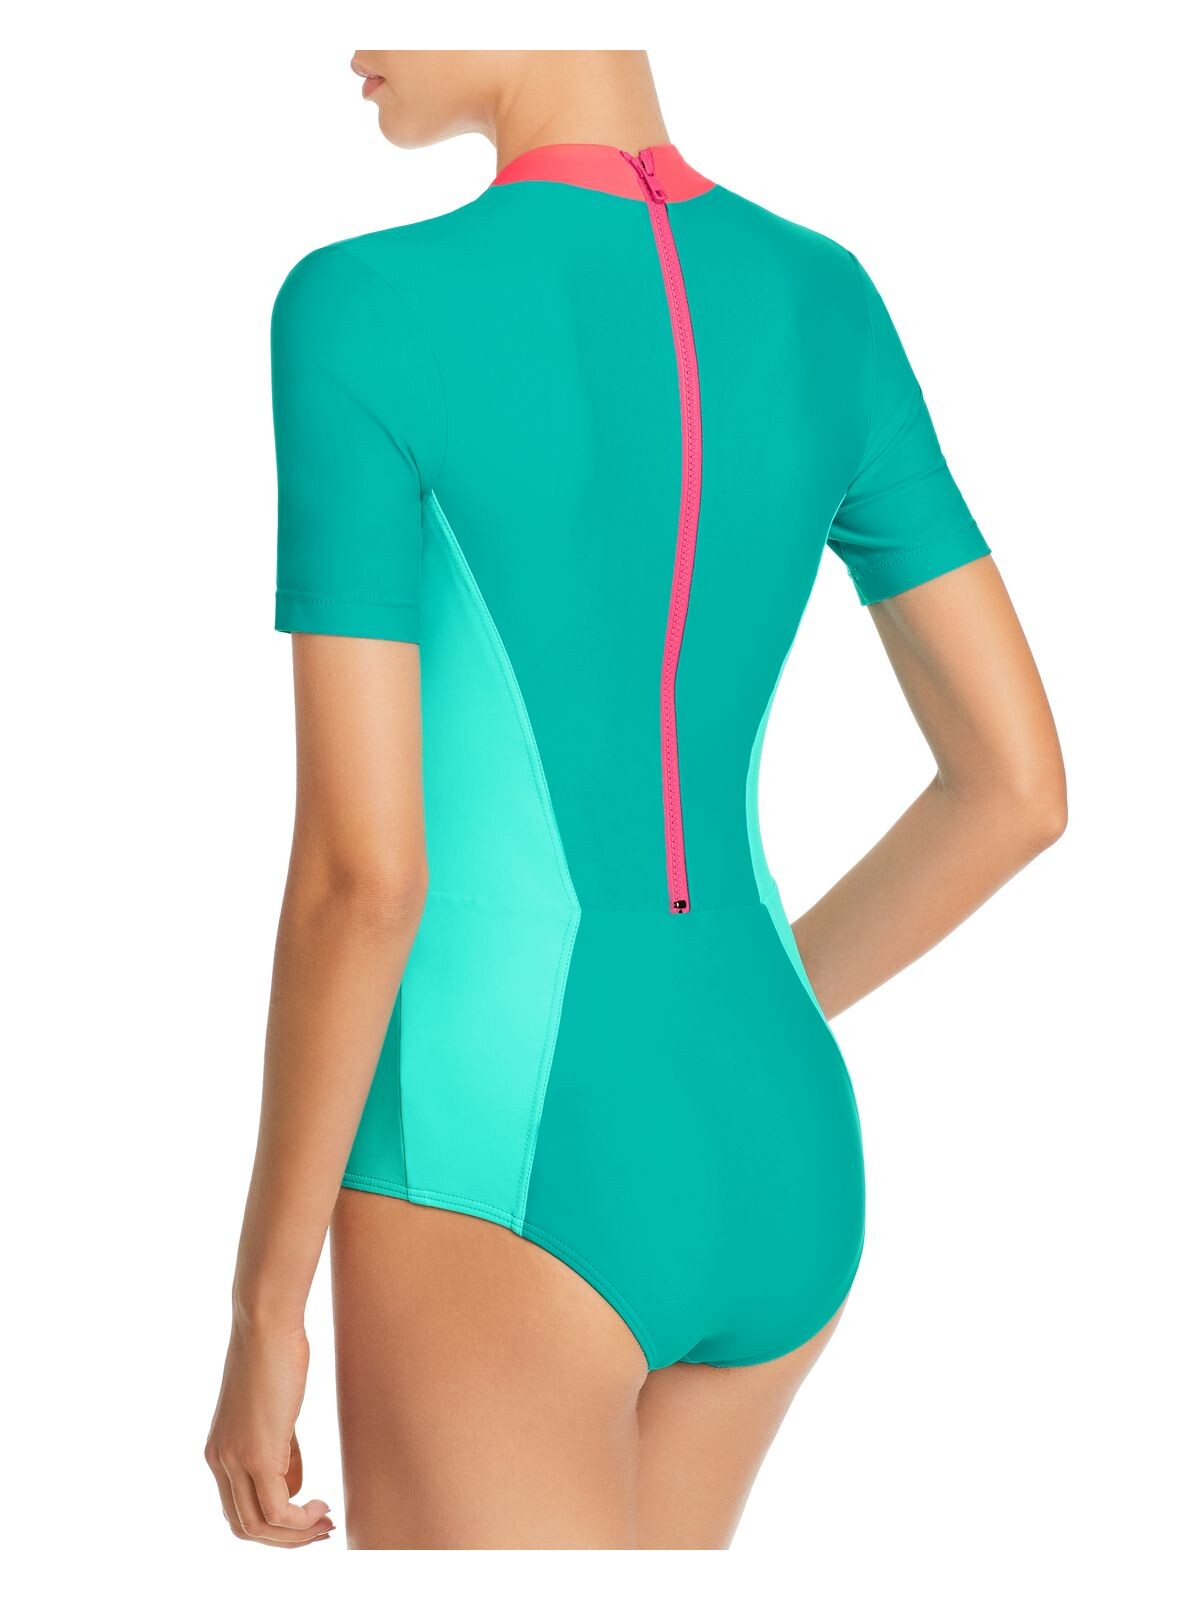 CHROMAT Women's Aqua Color Block SHORT SLEEVE BACK ZIP One Piece Swimsuit M